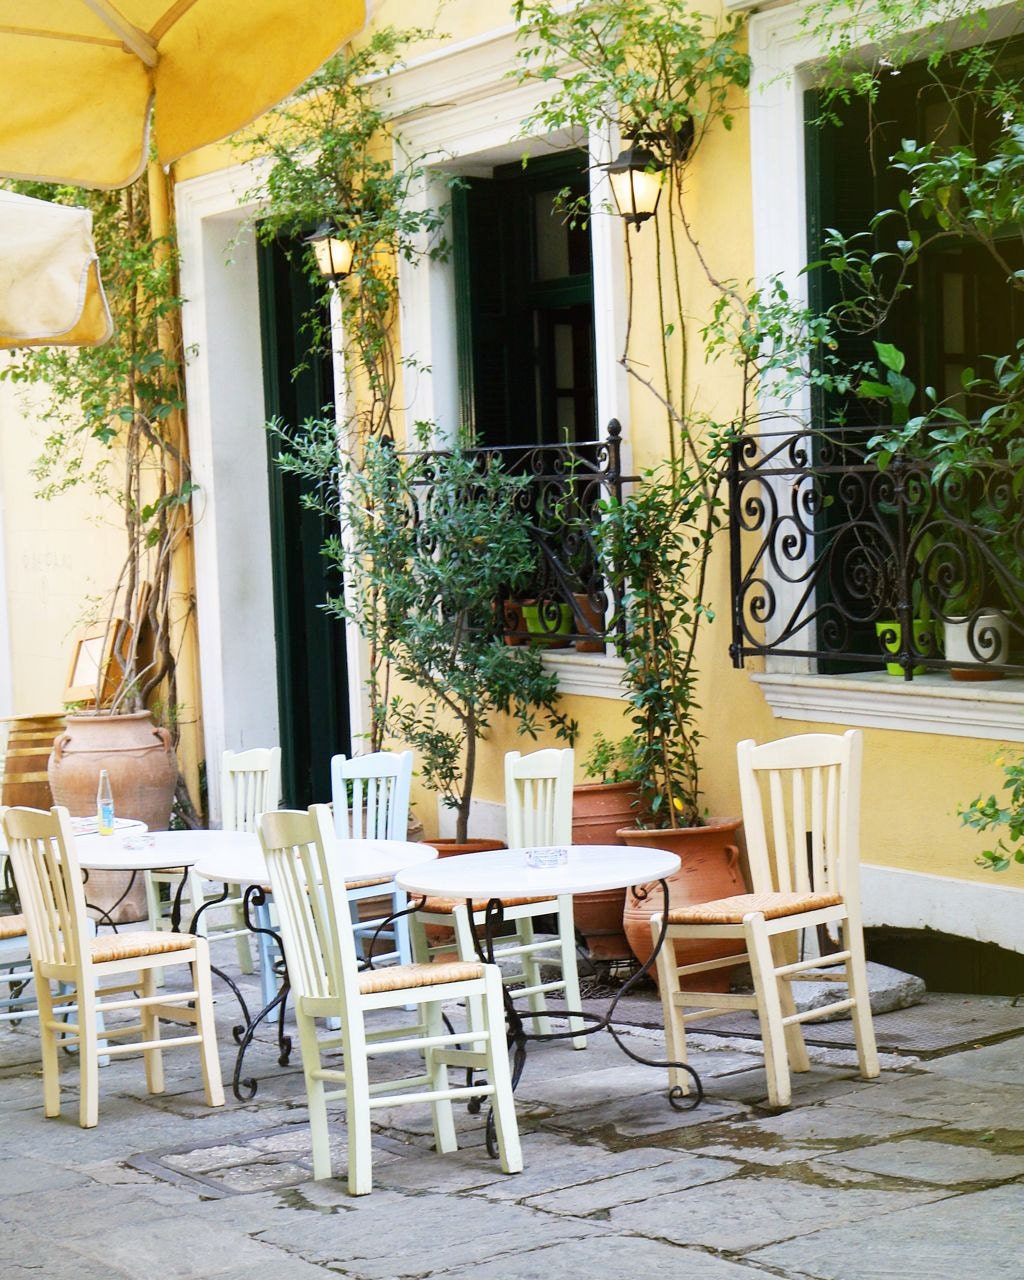 Cafe Art - Athens Cafe in Yellow - Greece Photo - Greek Restaurant - Lemon Sunshine Citrus - Home Decor - Wall Art - Kitchen Print - Happy